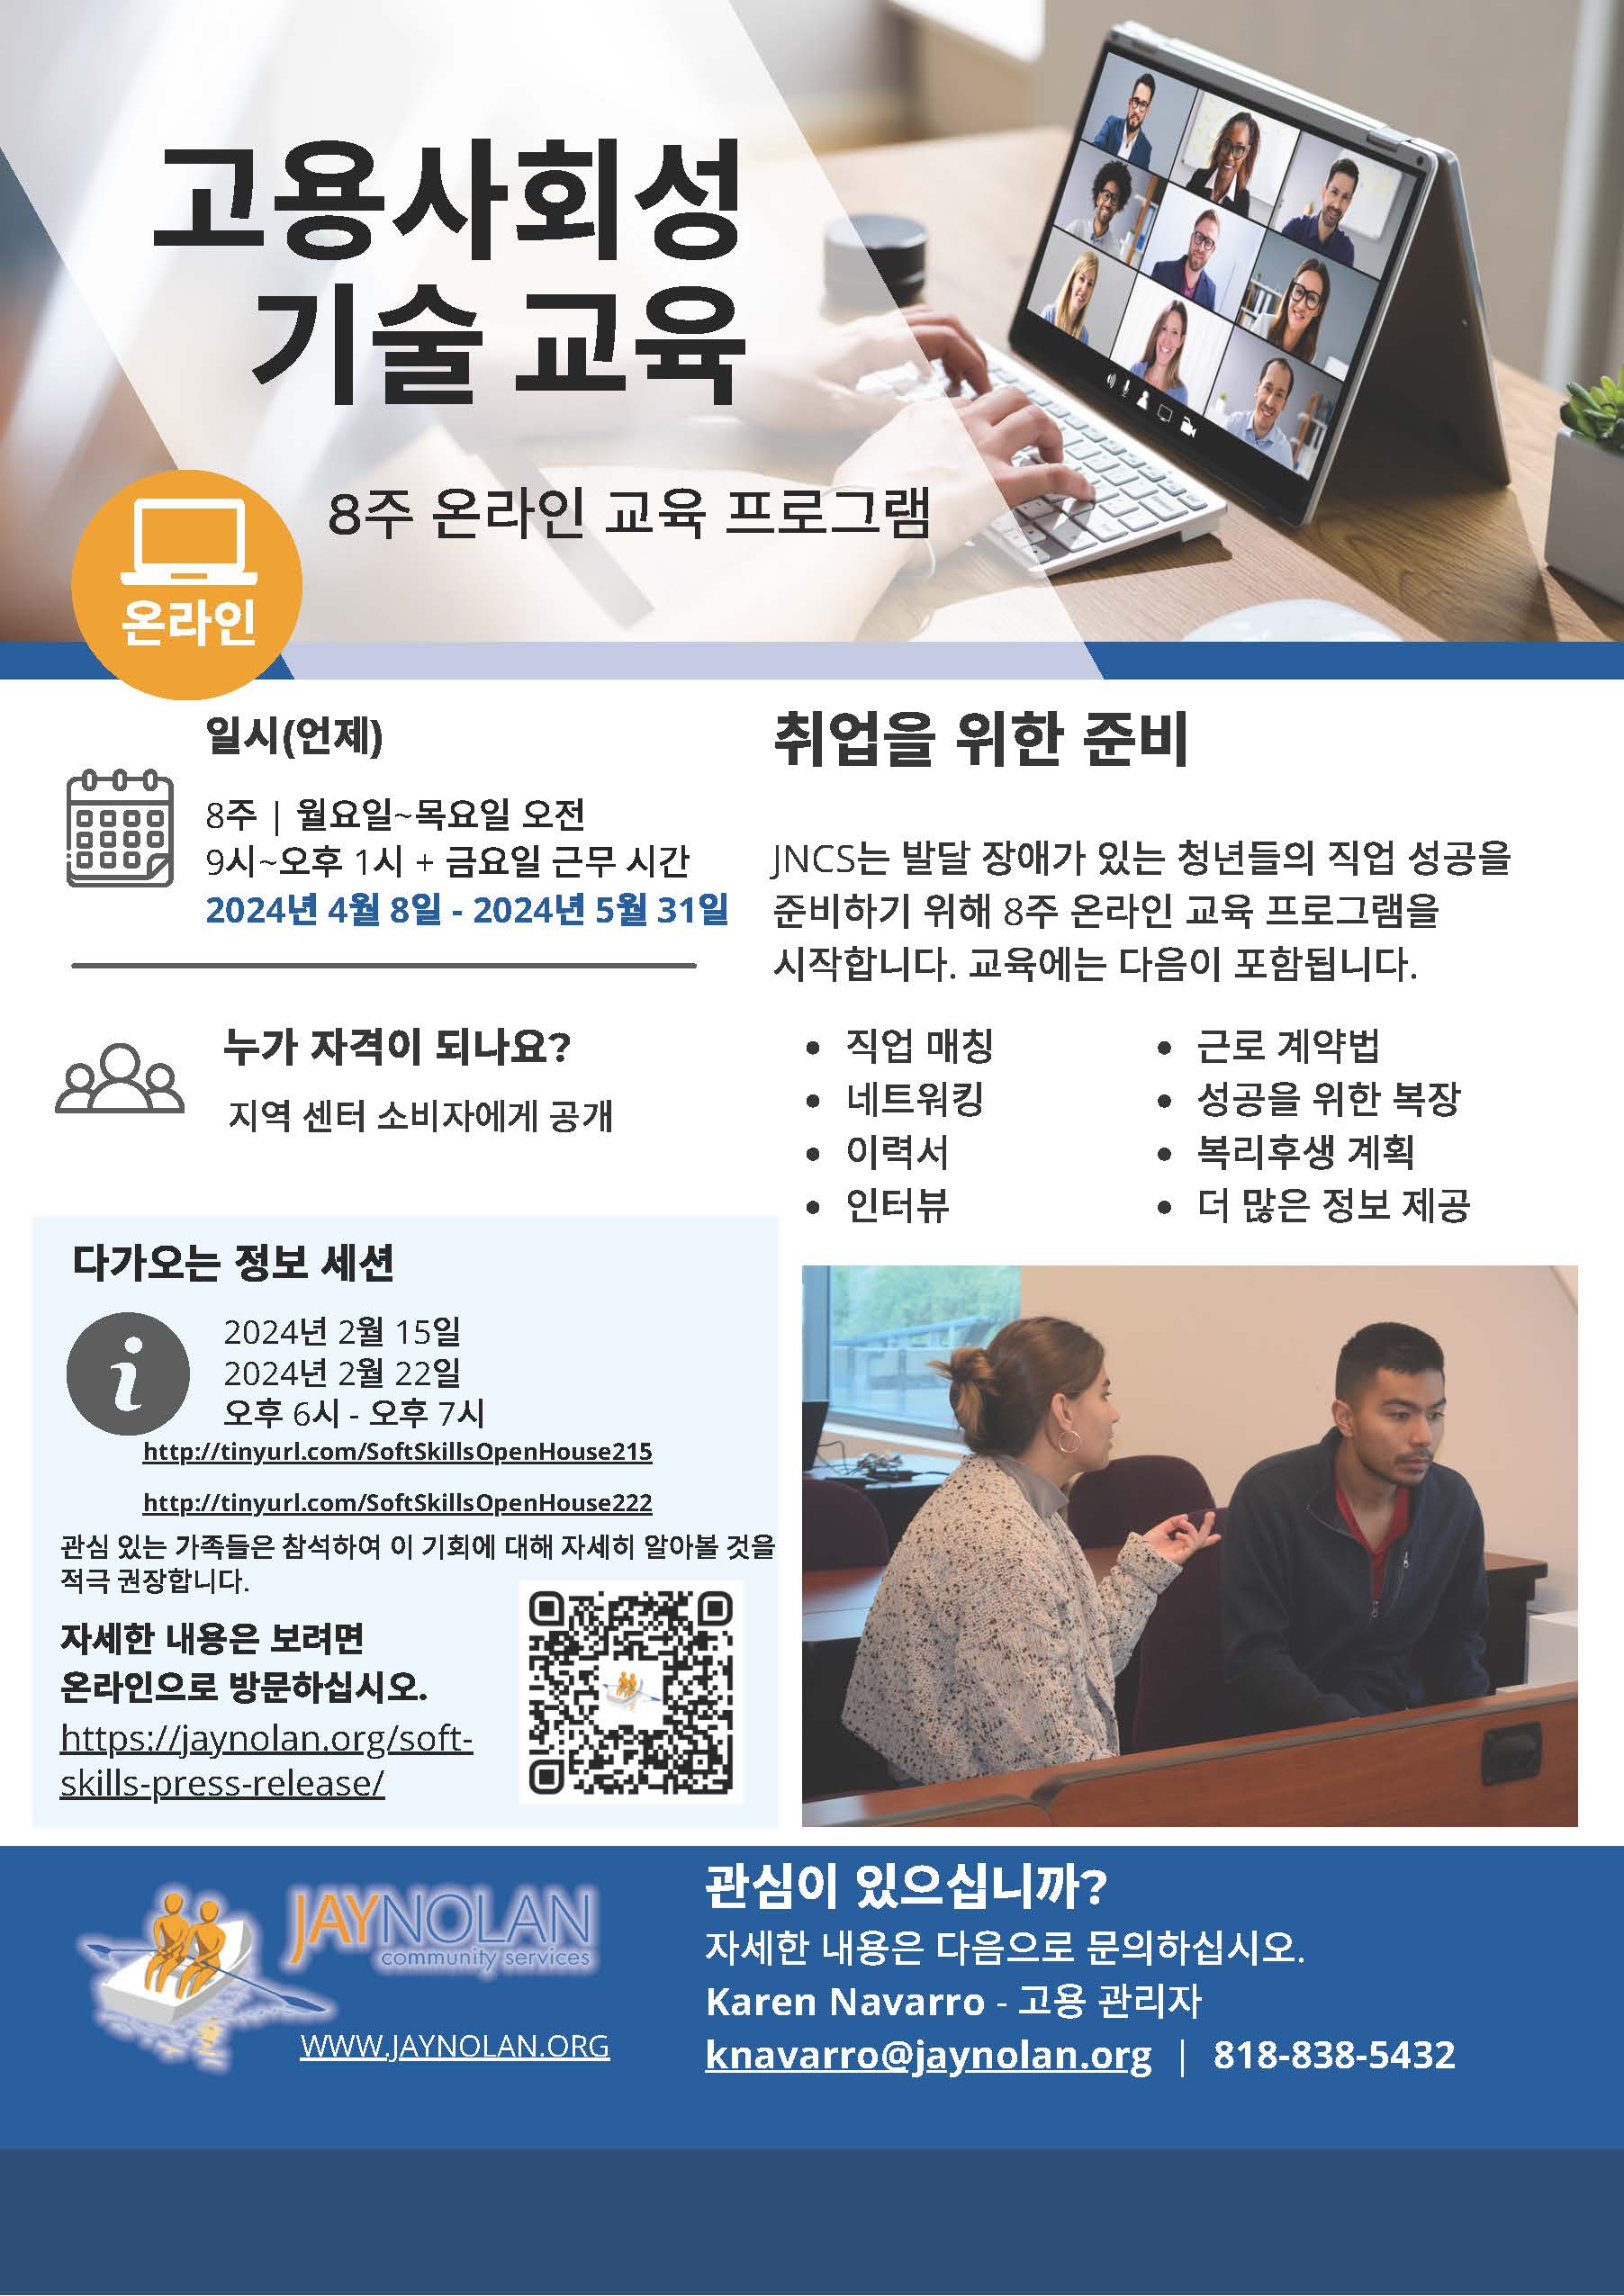 Korean language flyer for the JNCS soft skills training program cohort 2